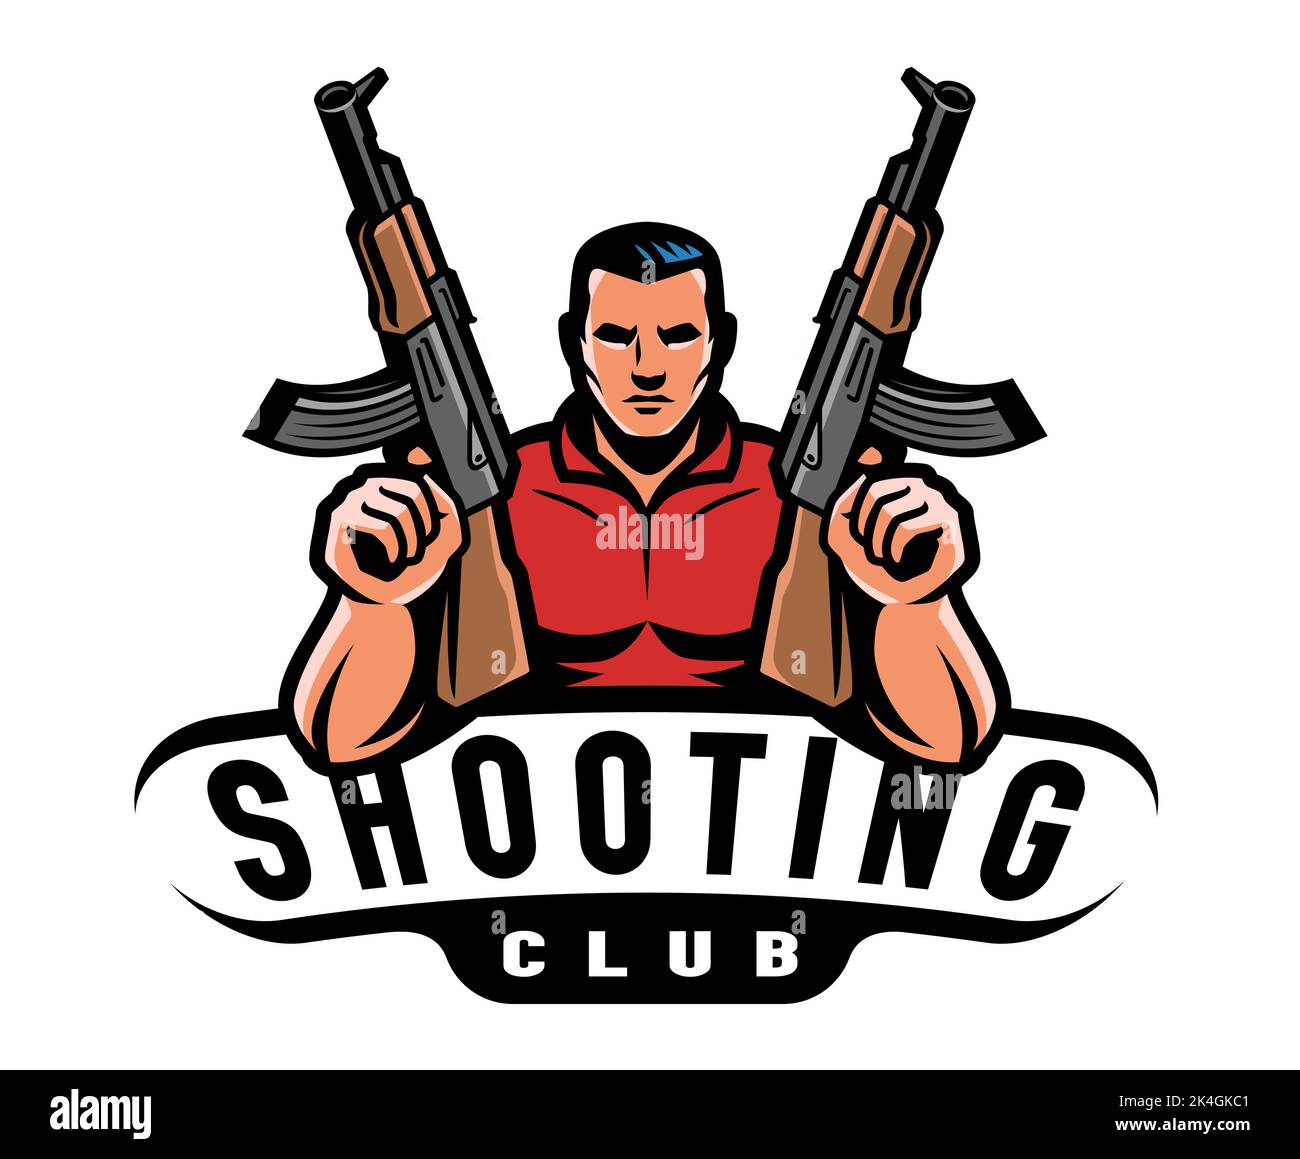 Shooting club sports logo. Man is holding an assault rifles. Active sport, gun shooting emblem. Vector illustration Stock Vector